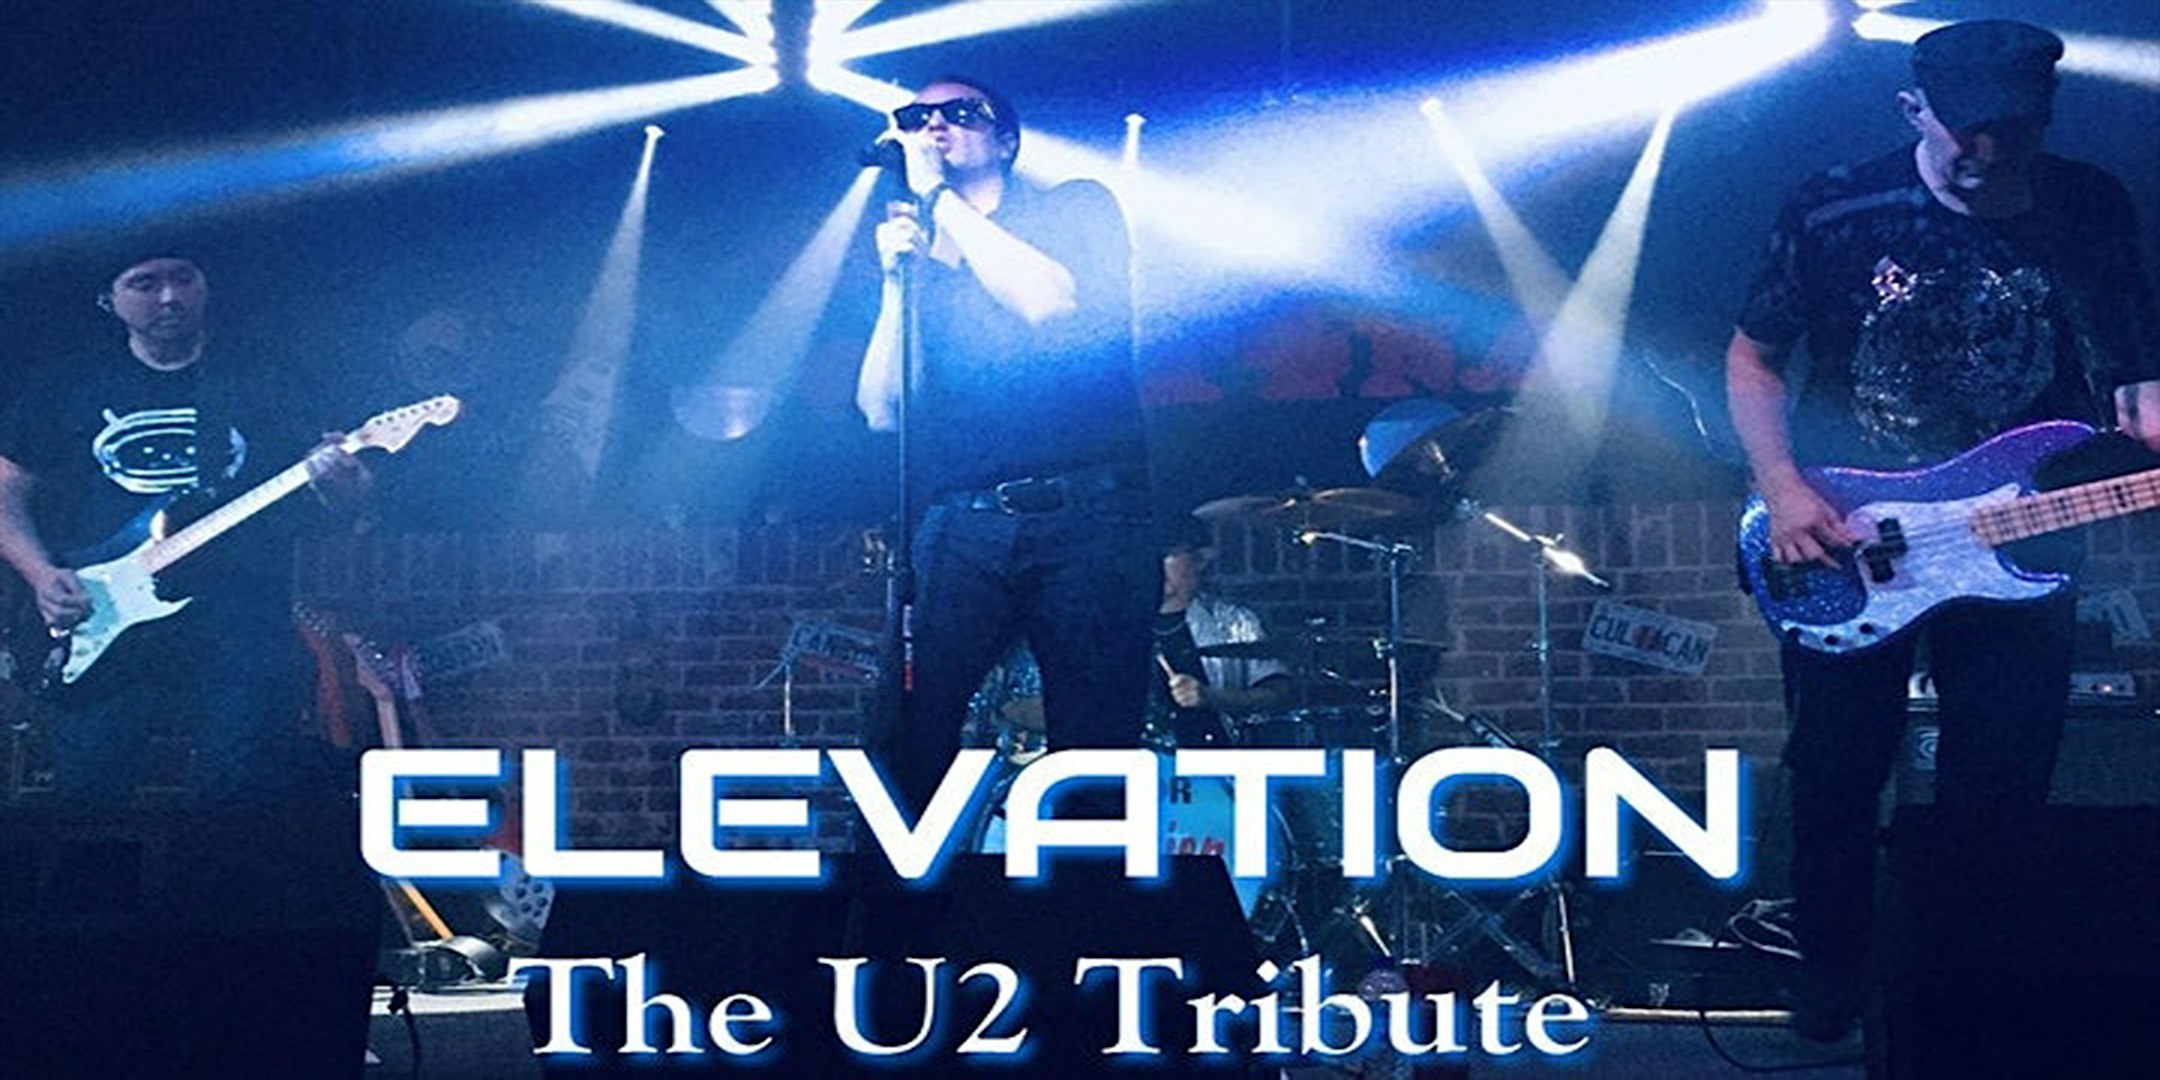 Elevation – The U2 Tribute